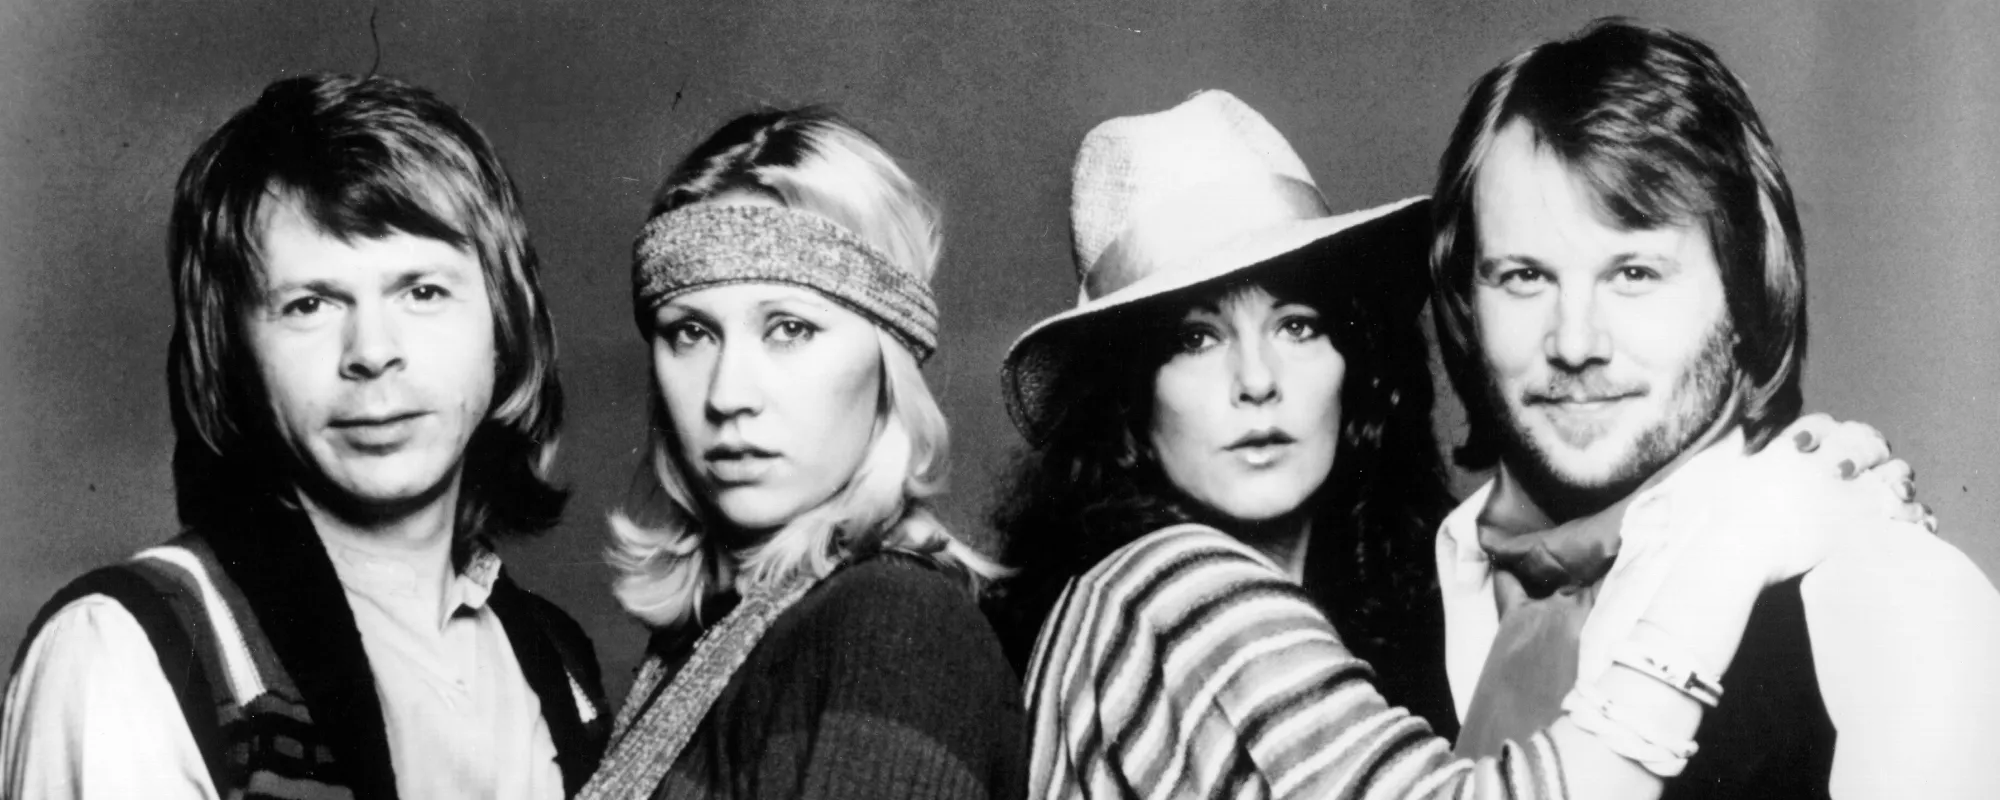 Remember When: ABBA Bid Farewell with the Downbeat but Brilliant Album ‘The Visitors’